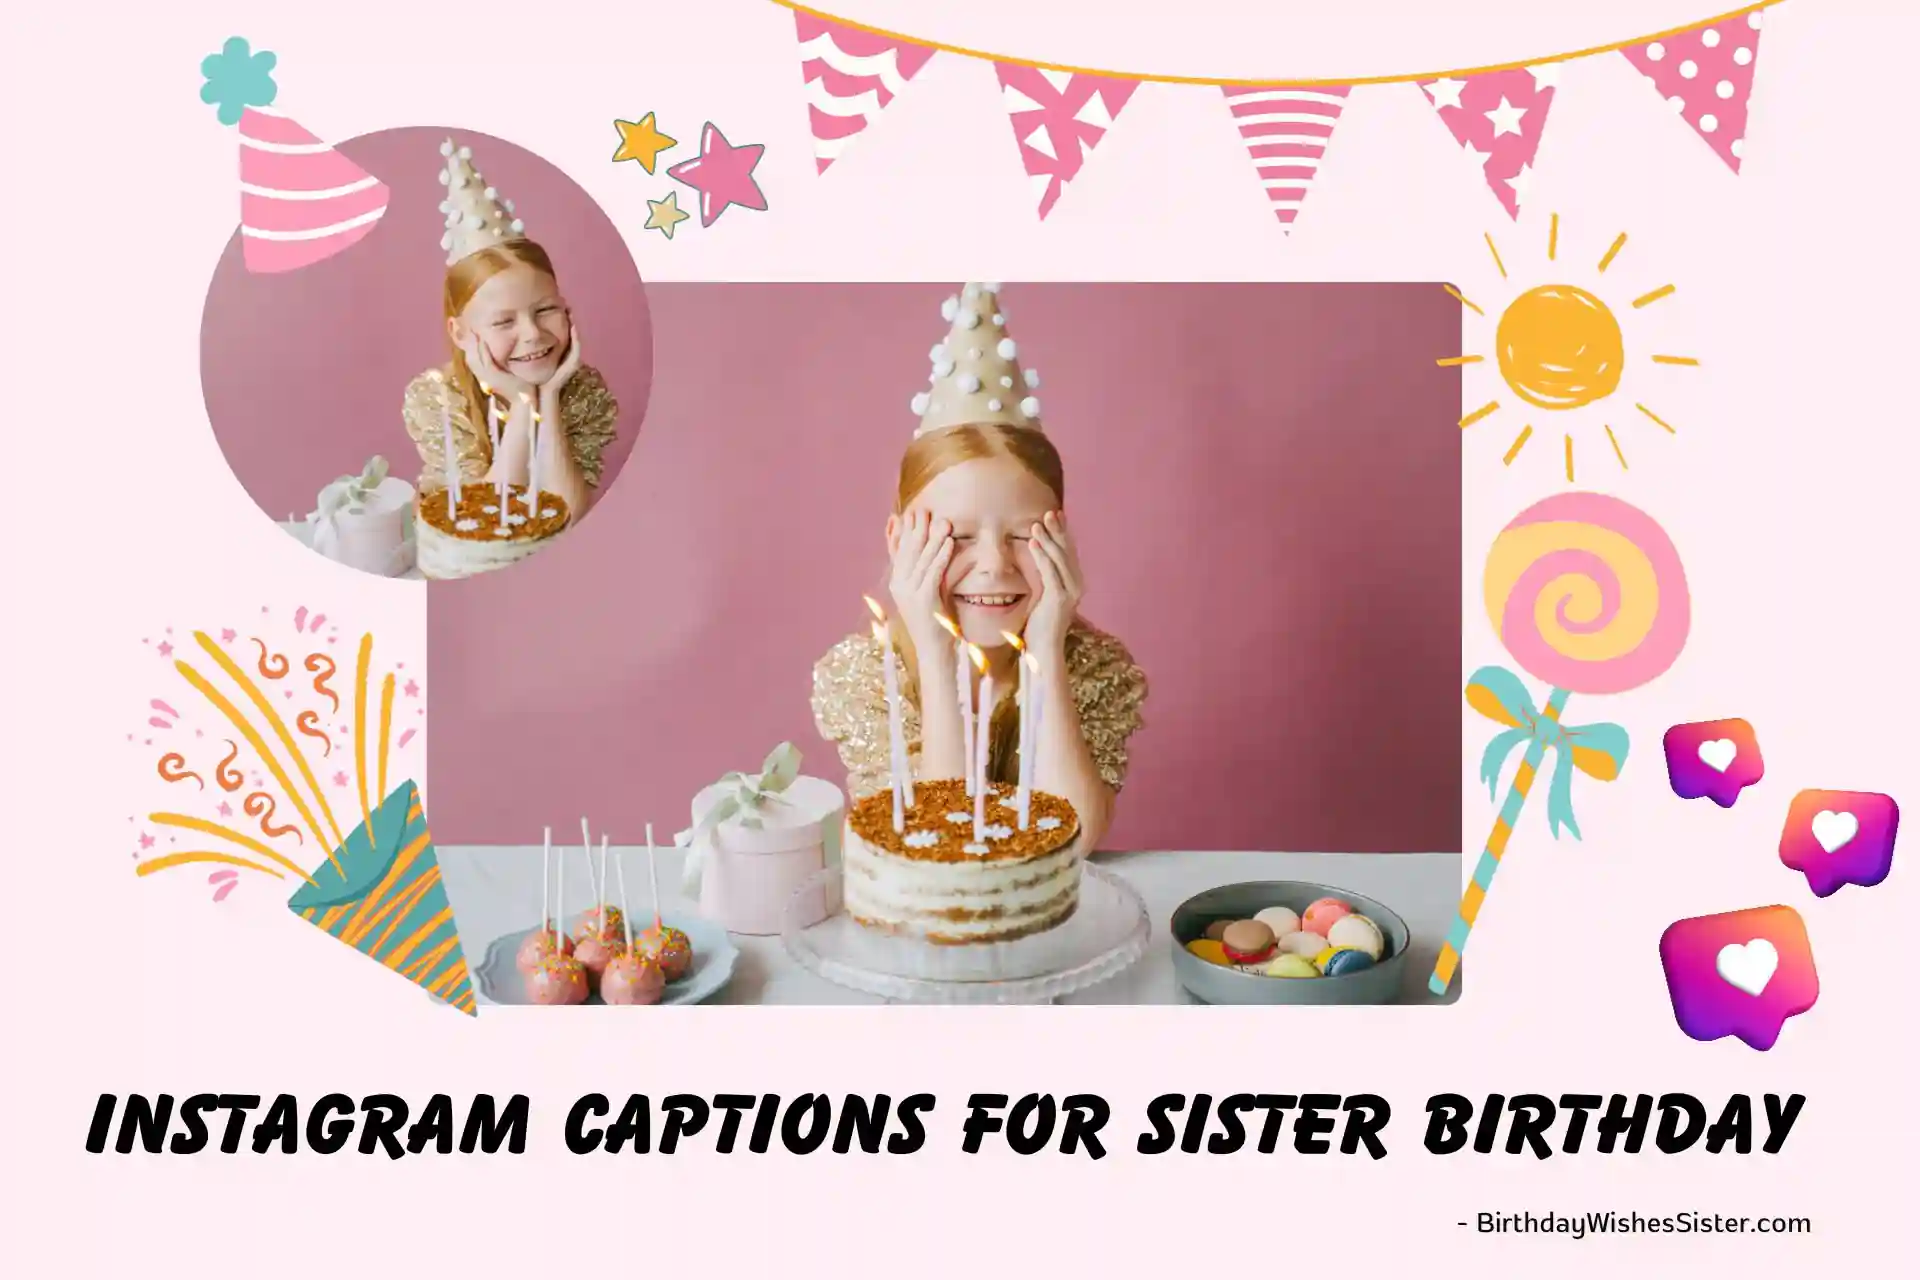 Sister Birthday Captions For Instagram, instagram captions for sister birthday